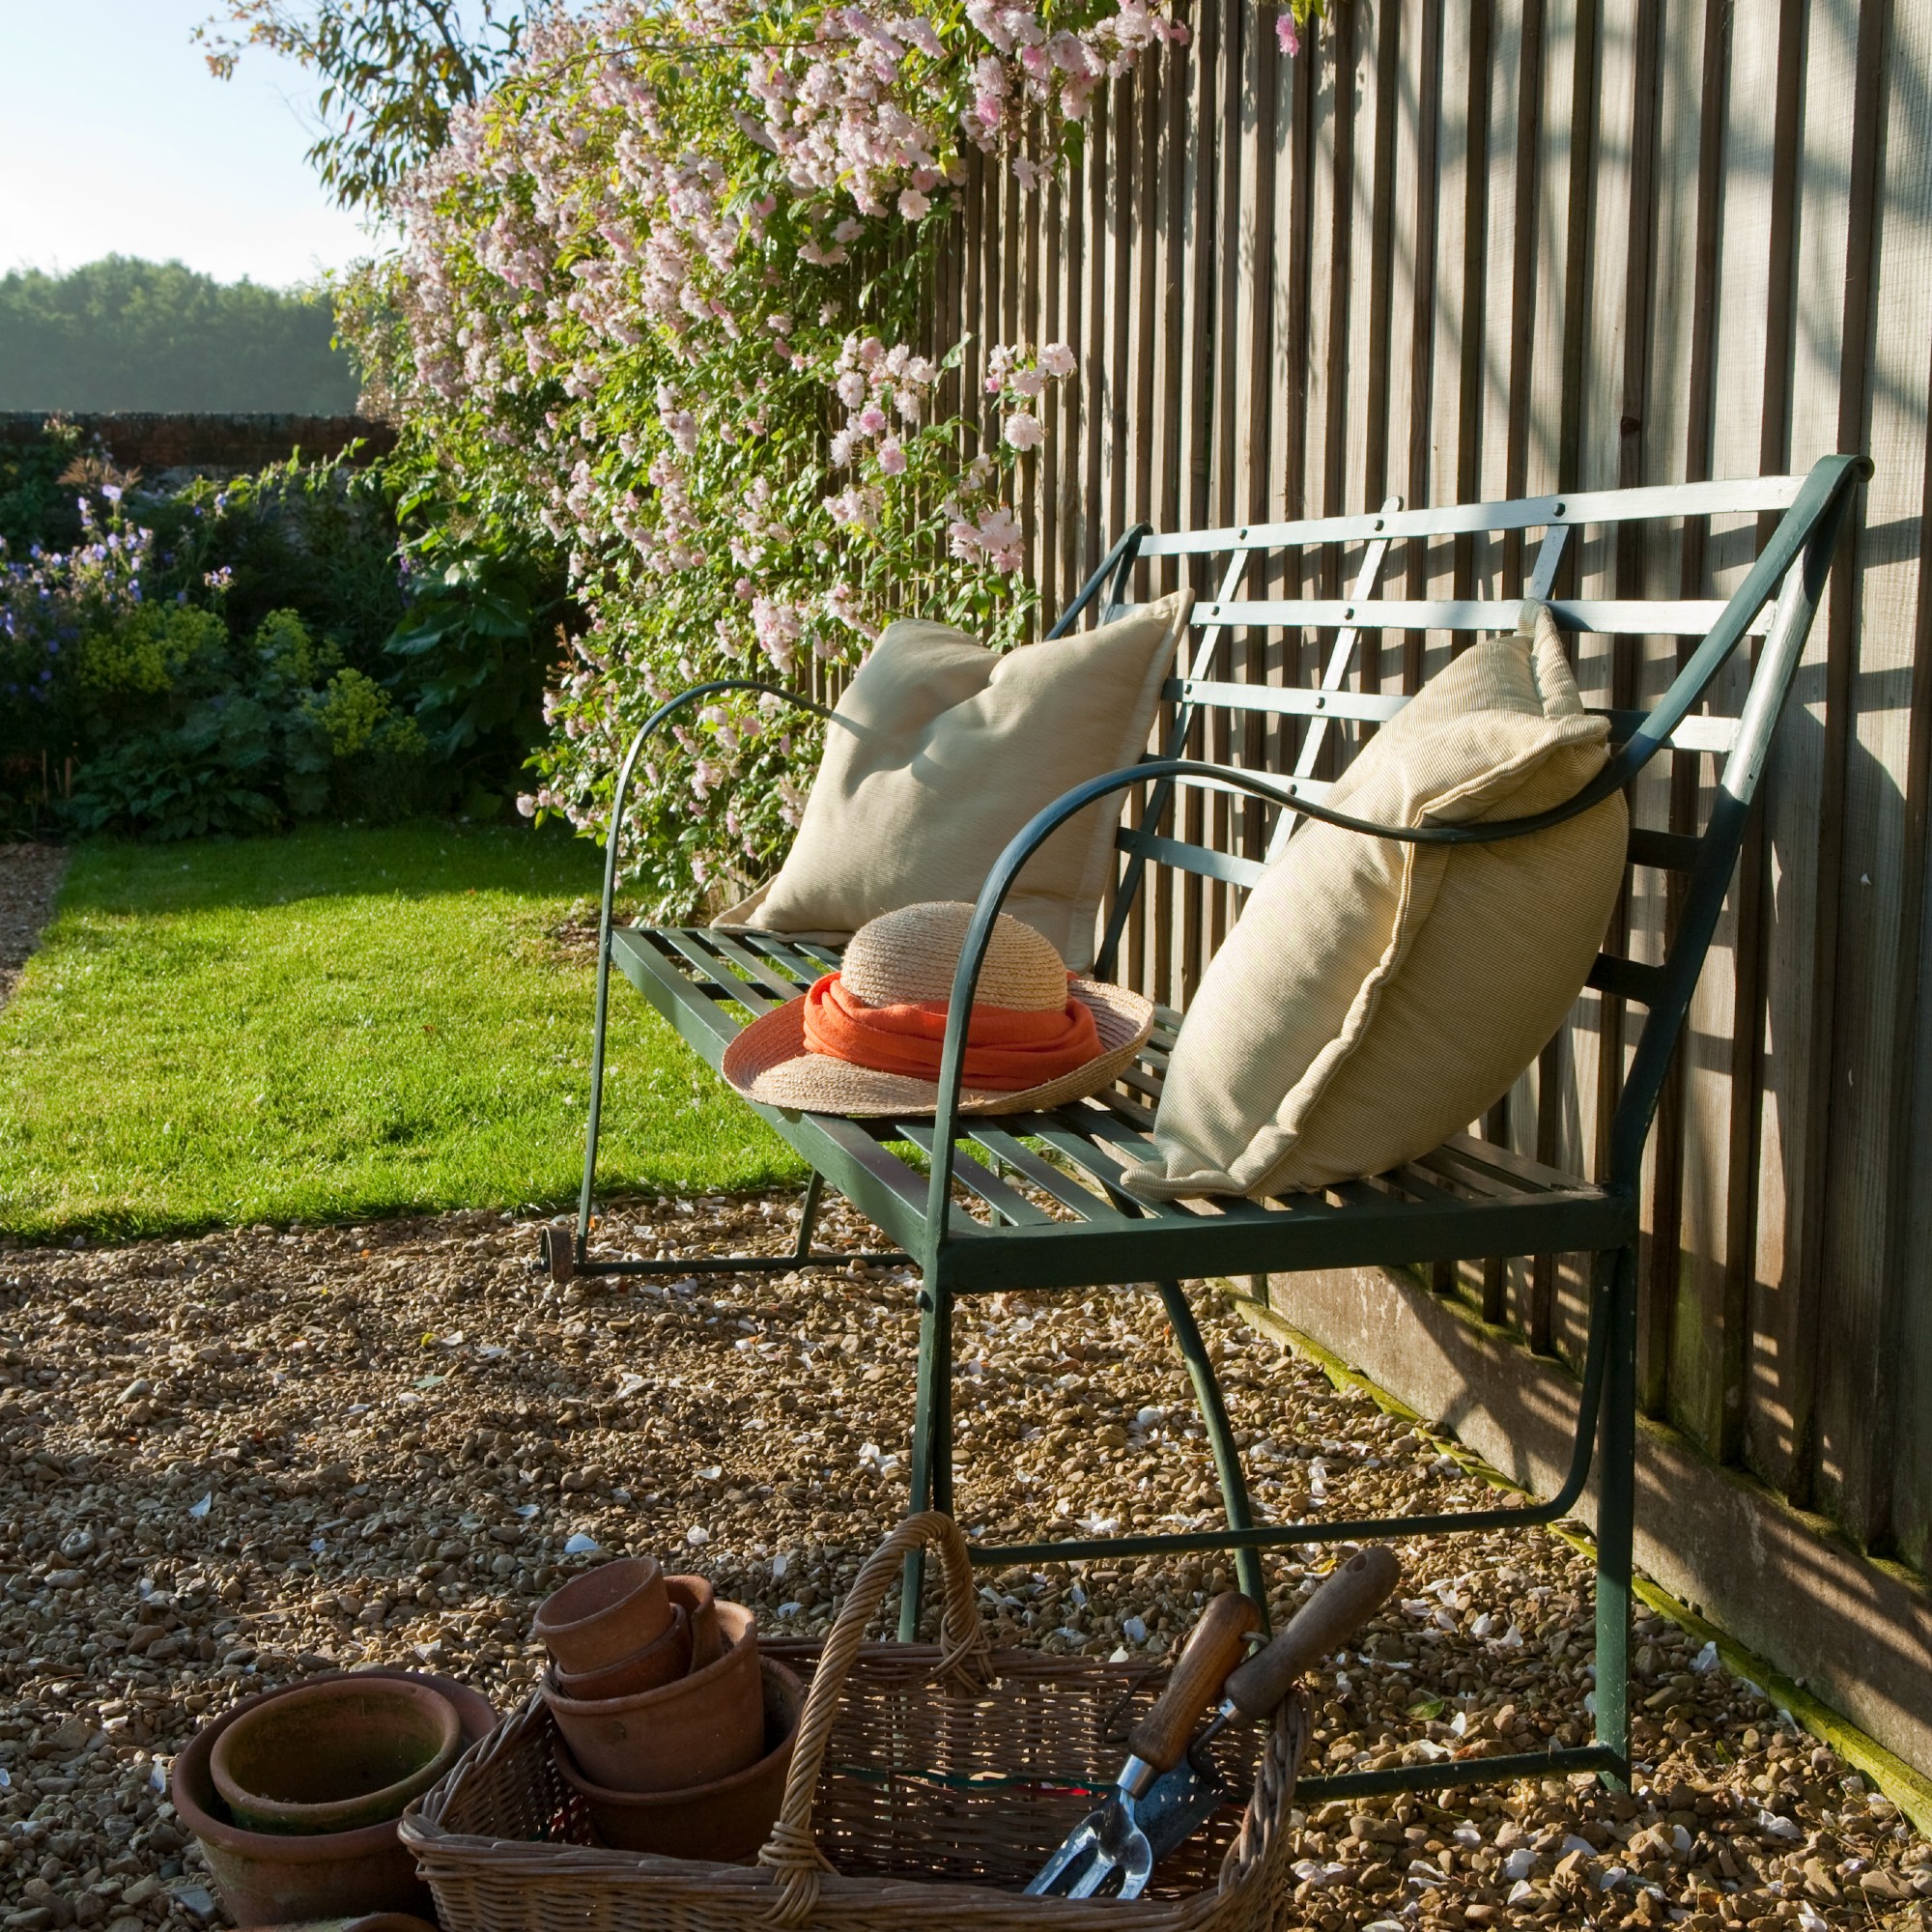 A green metal garden bench with gardening supplies